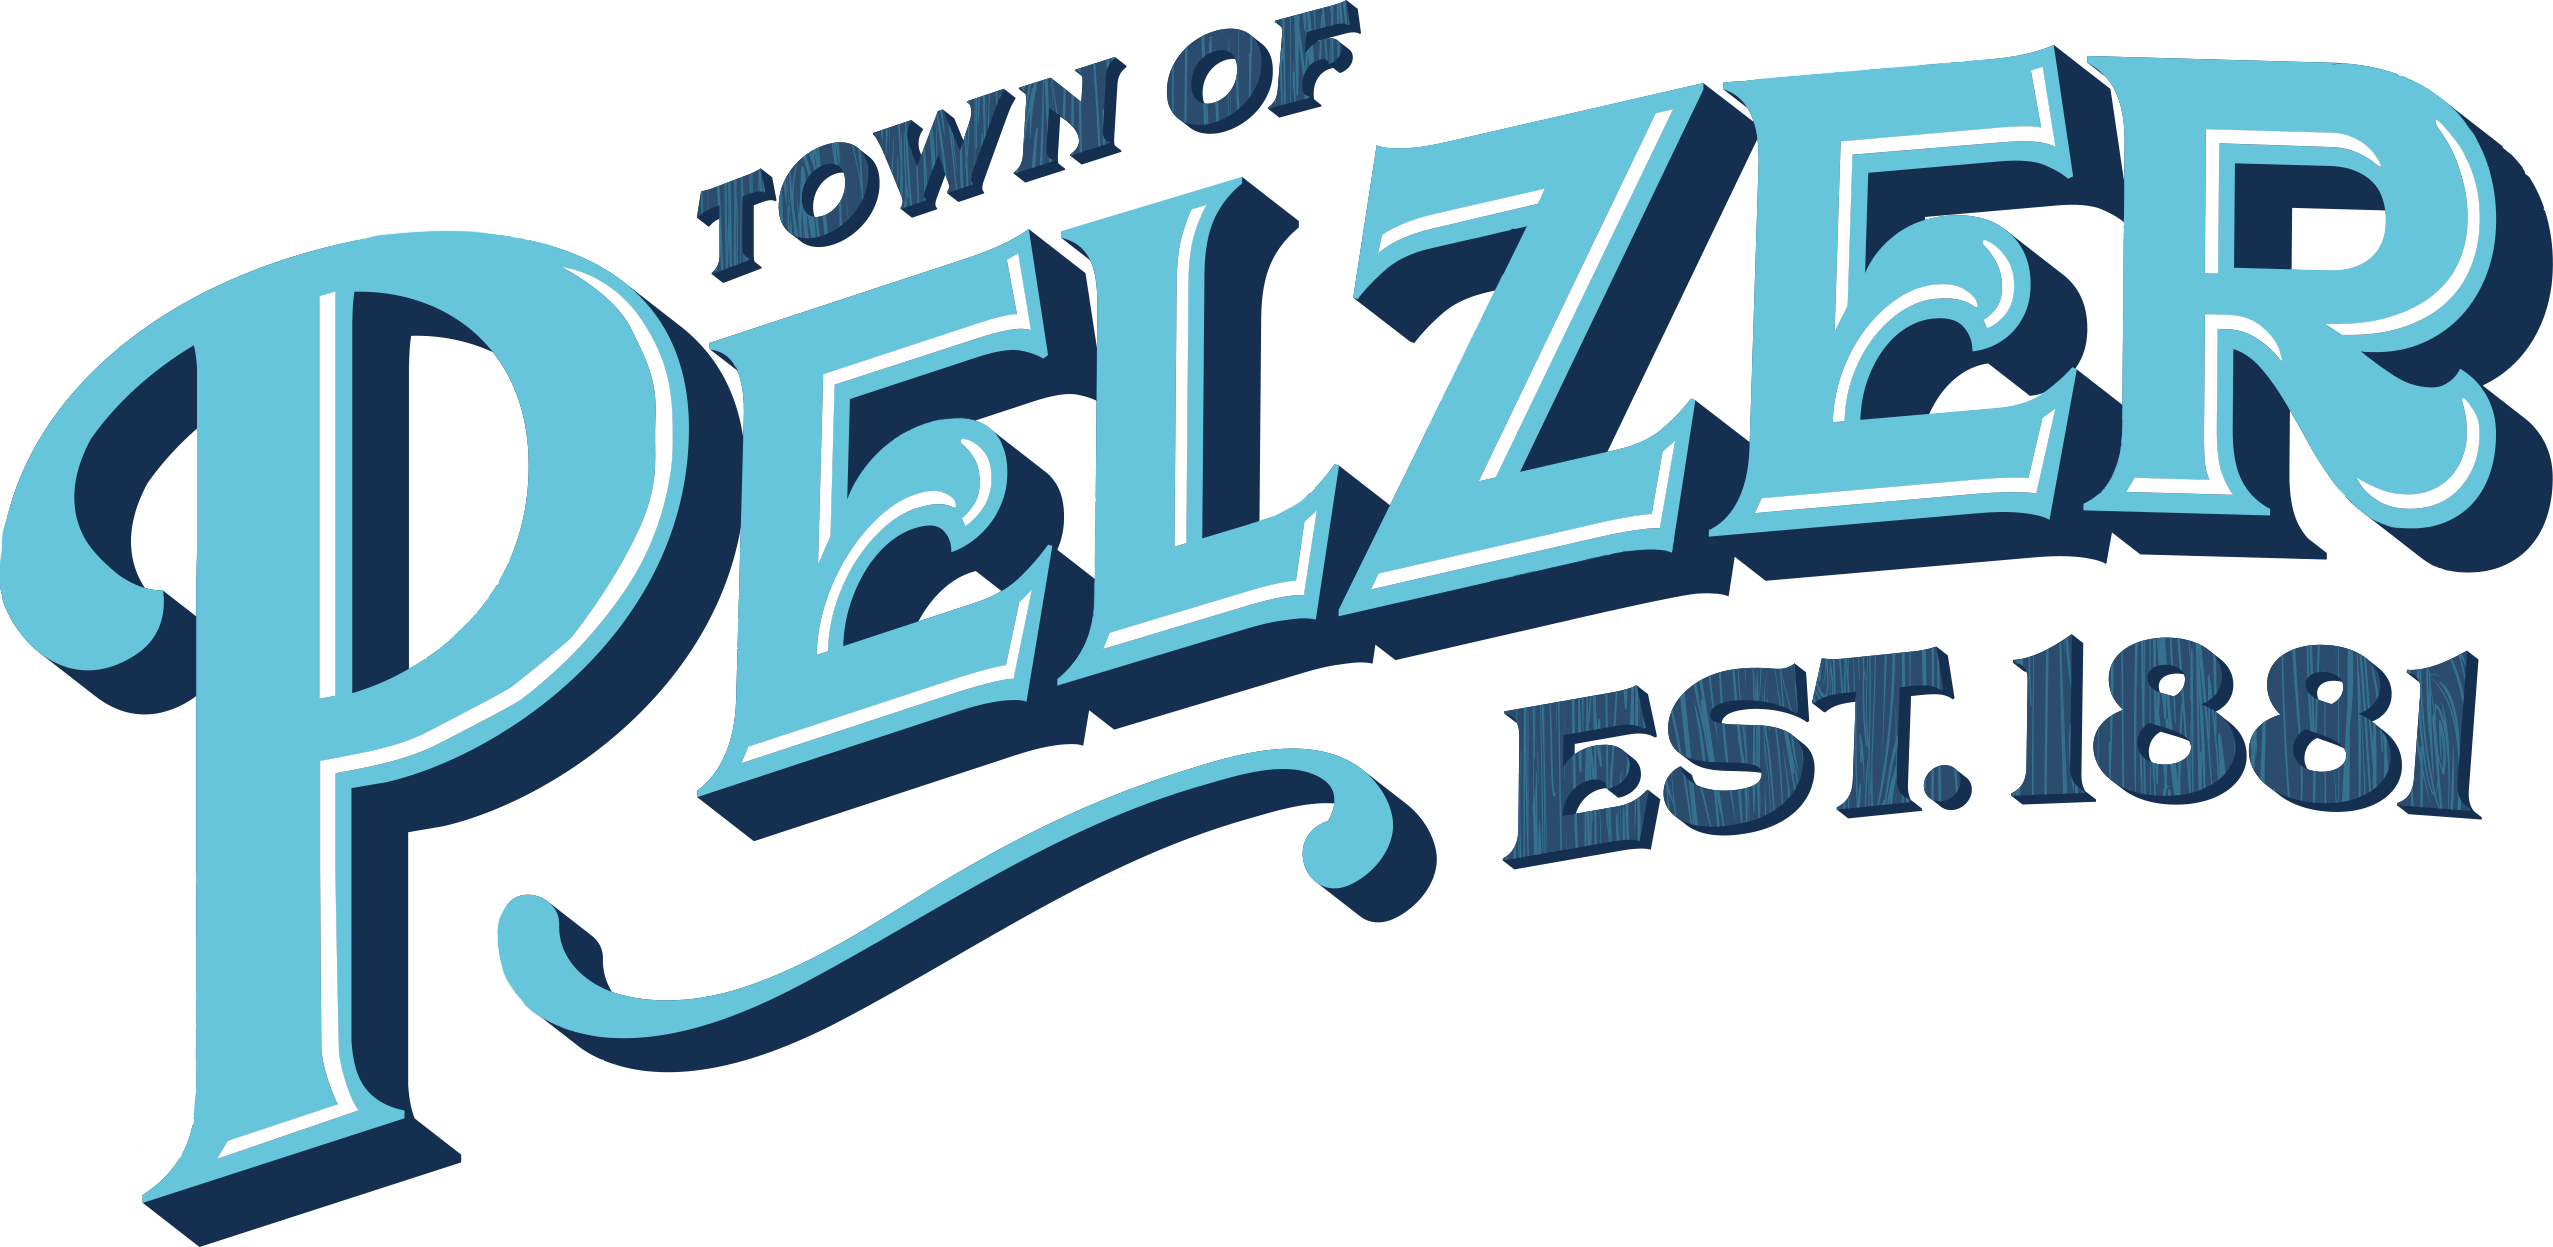 Town of  Pelzer